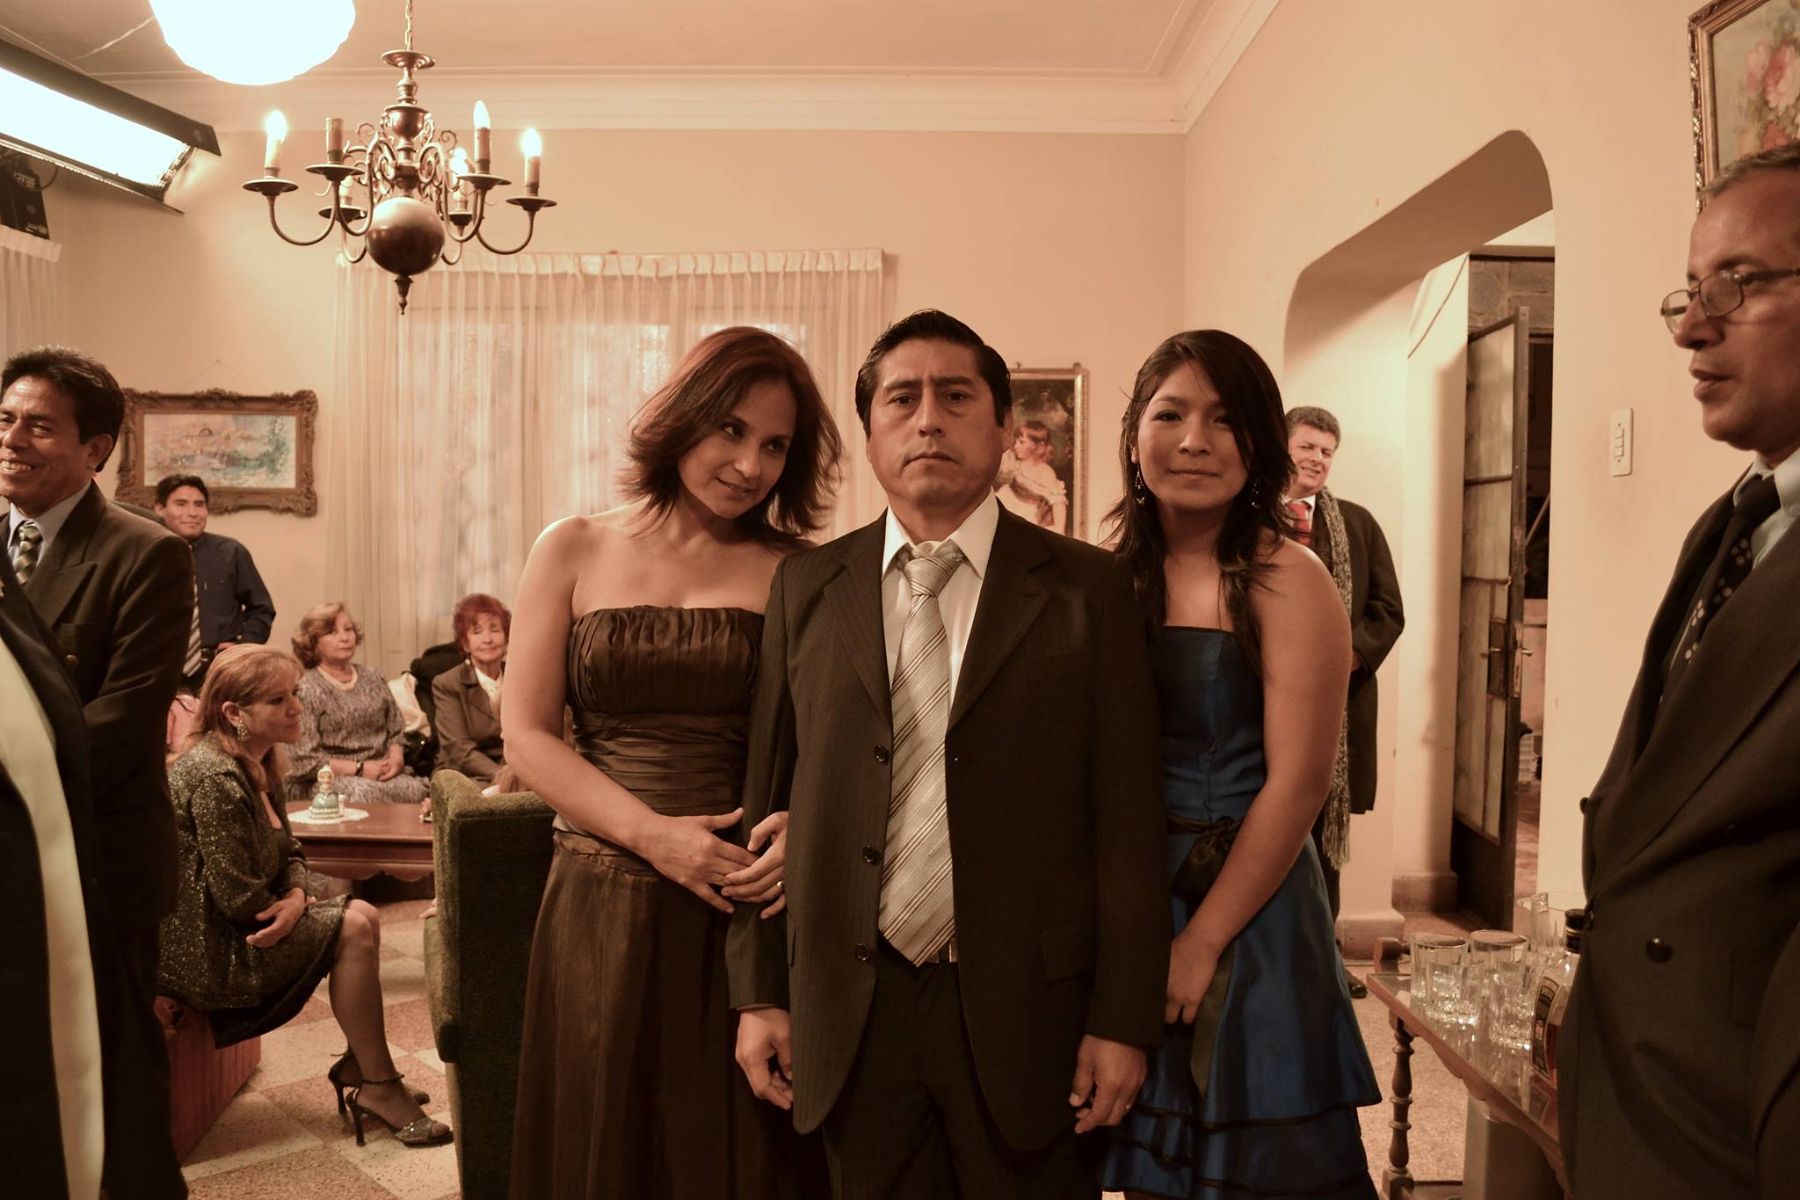 The Mute. 2013. Peru/Mexico. Written and directed by Daniel Vega Vidal, Diego Vega Vidal